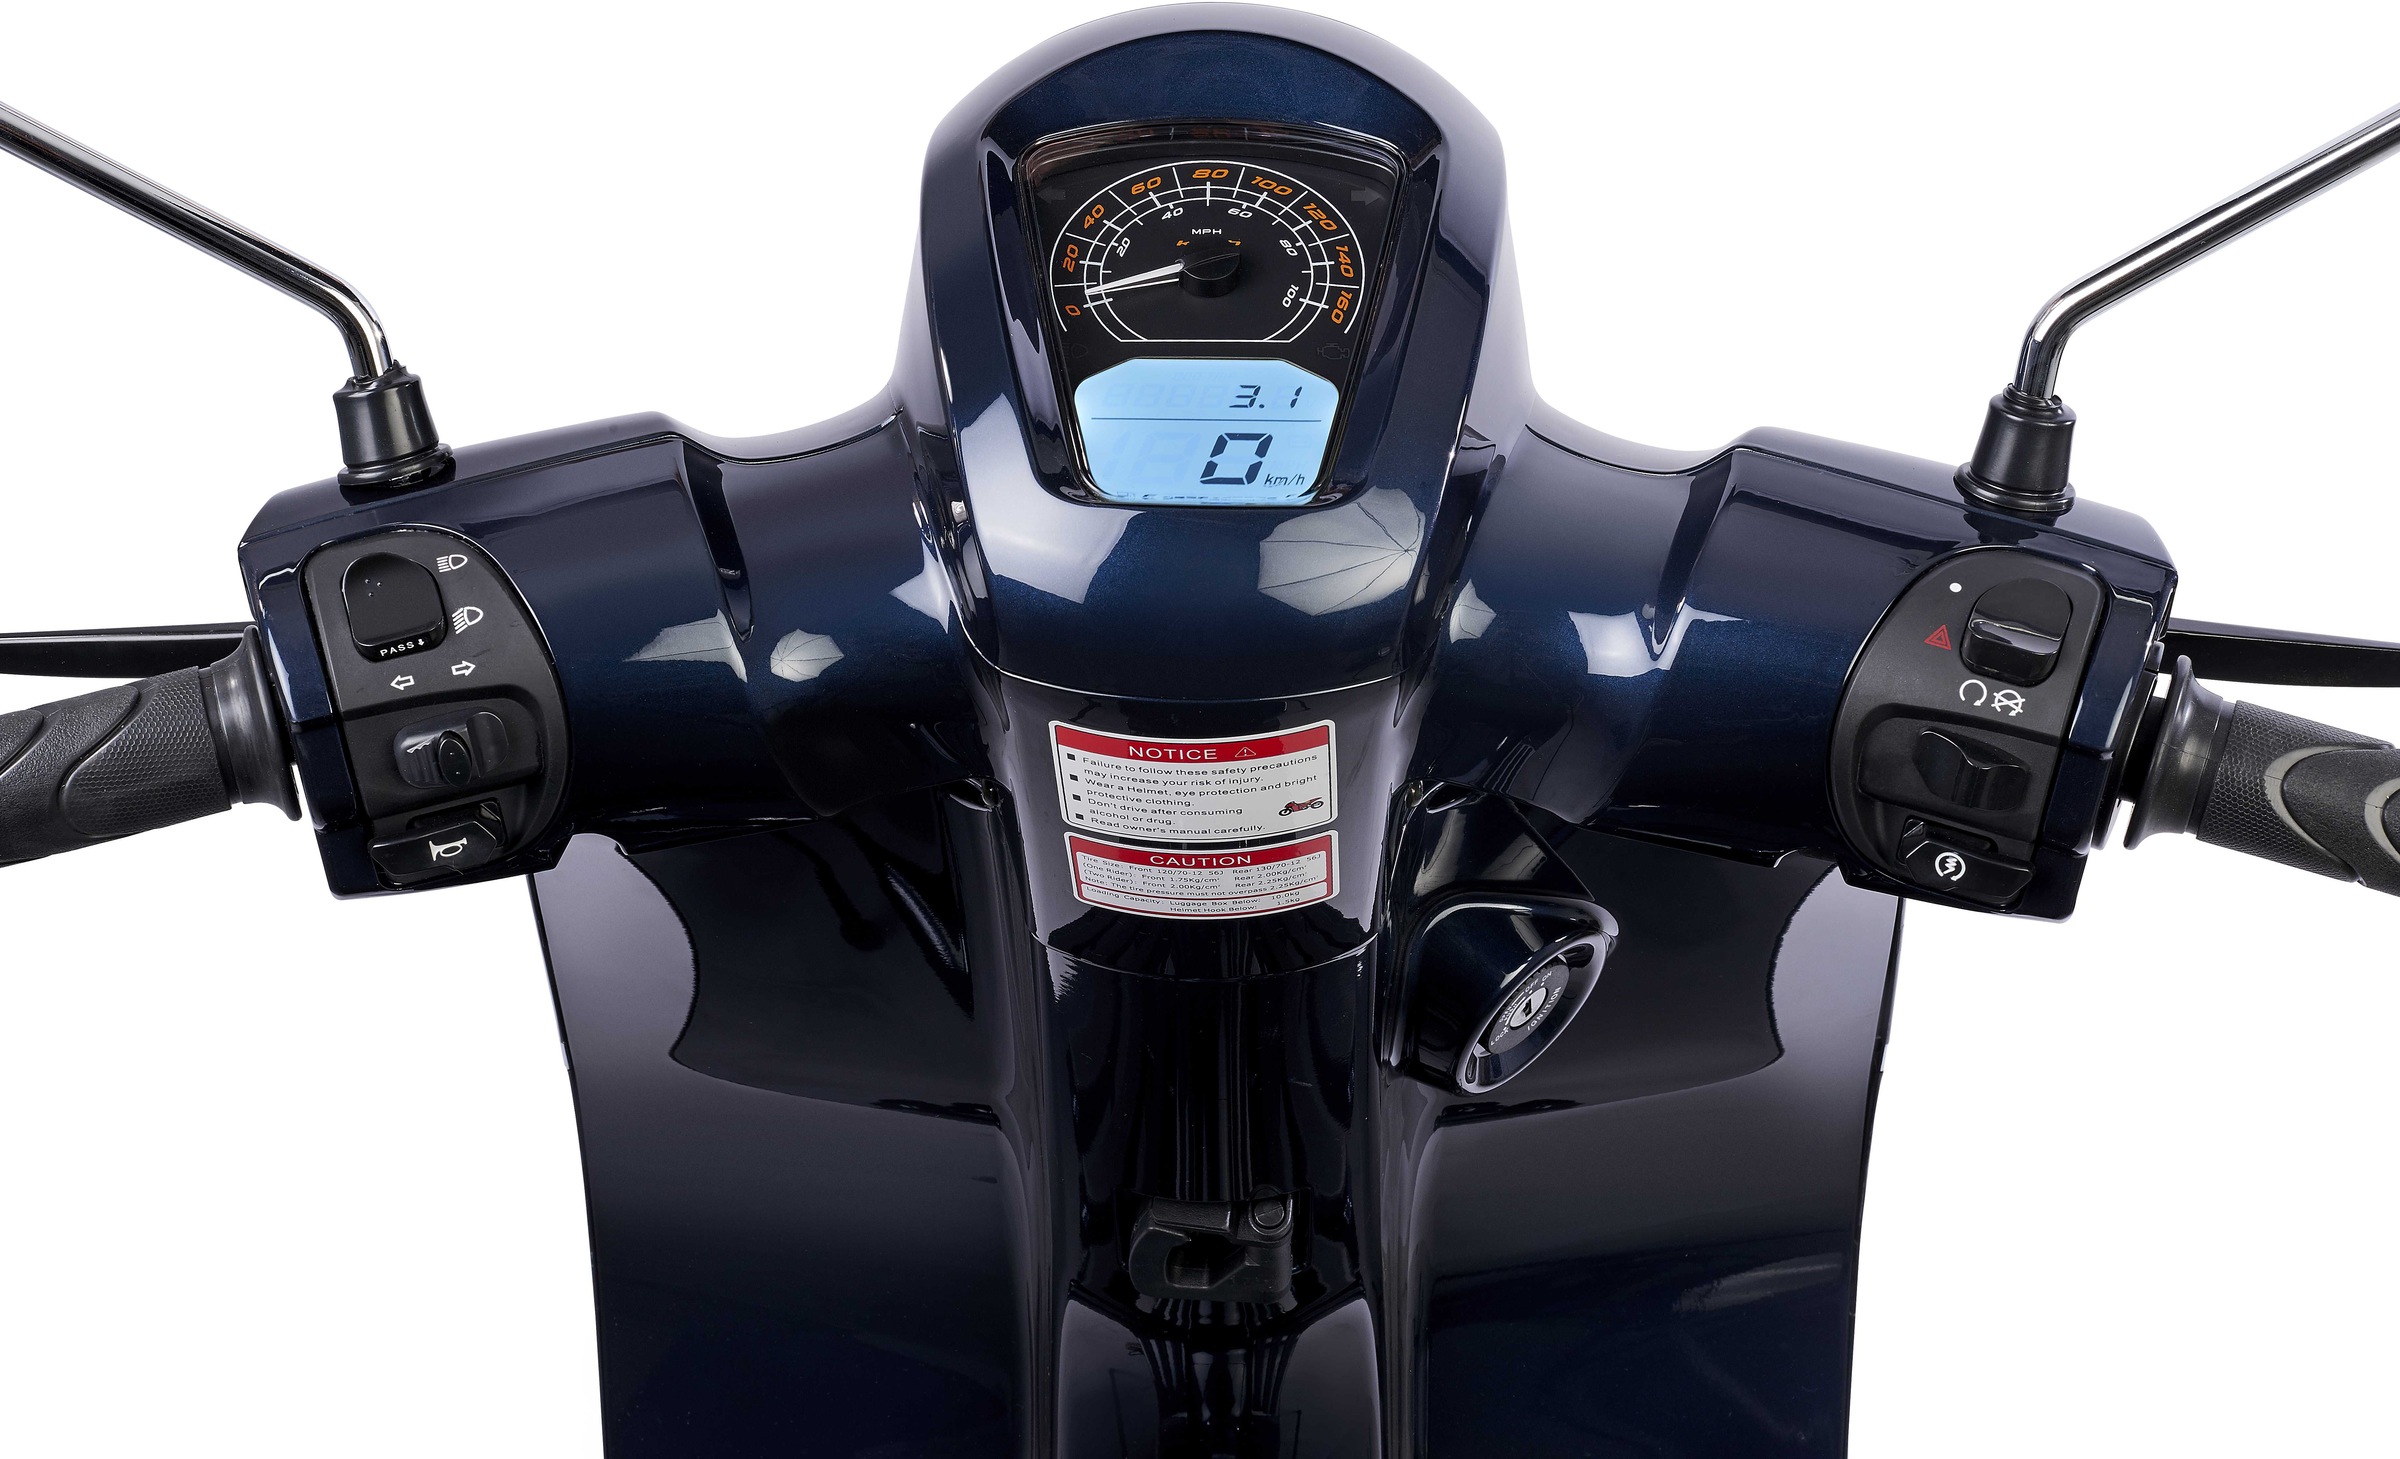 Zündapp Motorroller »Bella-R 50 (45km/h) E5«, 49 cm³, 45 km/h, Euro 5, 3 PS